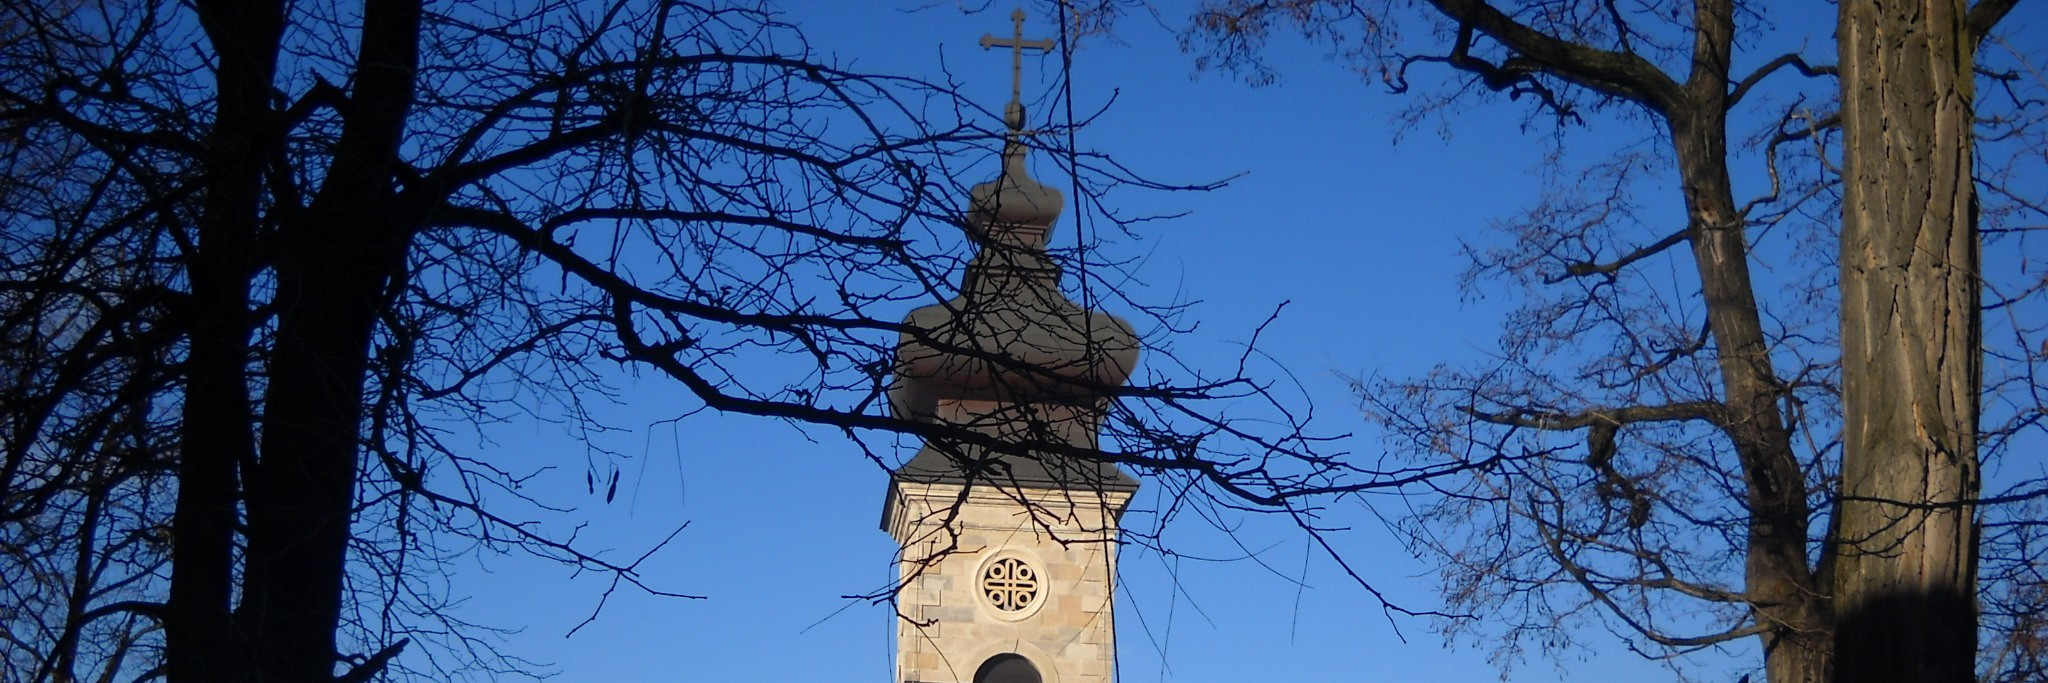 Церковь Успения Пресвятой Богородицы в Ливно. Фото: Елена Арсениевич, CC BY-SA 3.0